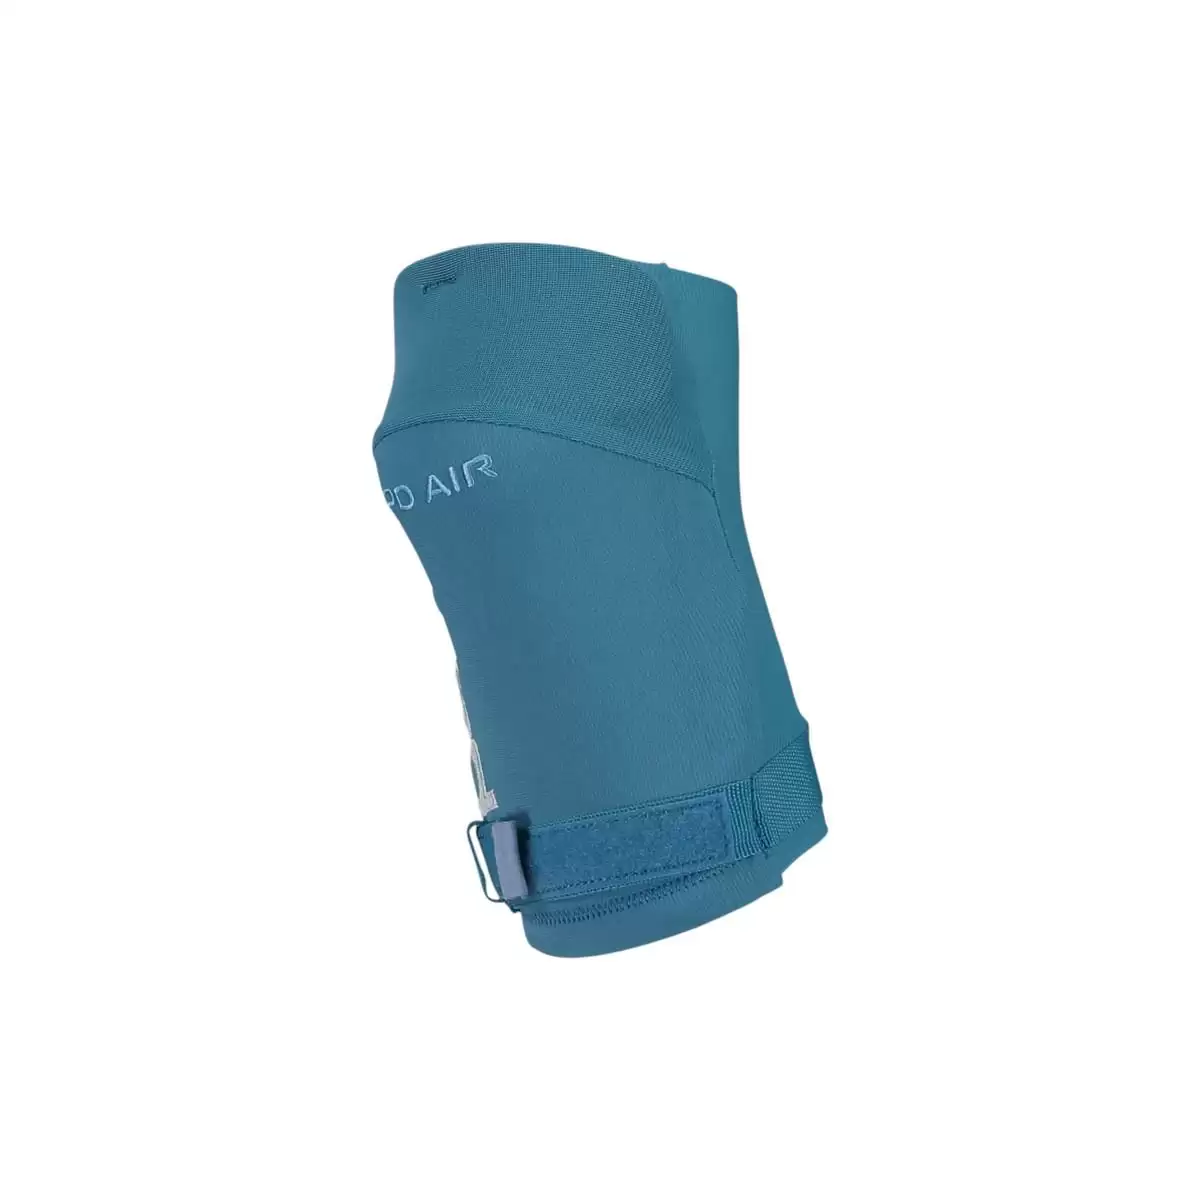 Joint VPD Air Elbow Protectors Basalt Blue Size M #1